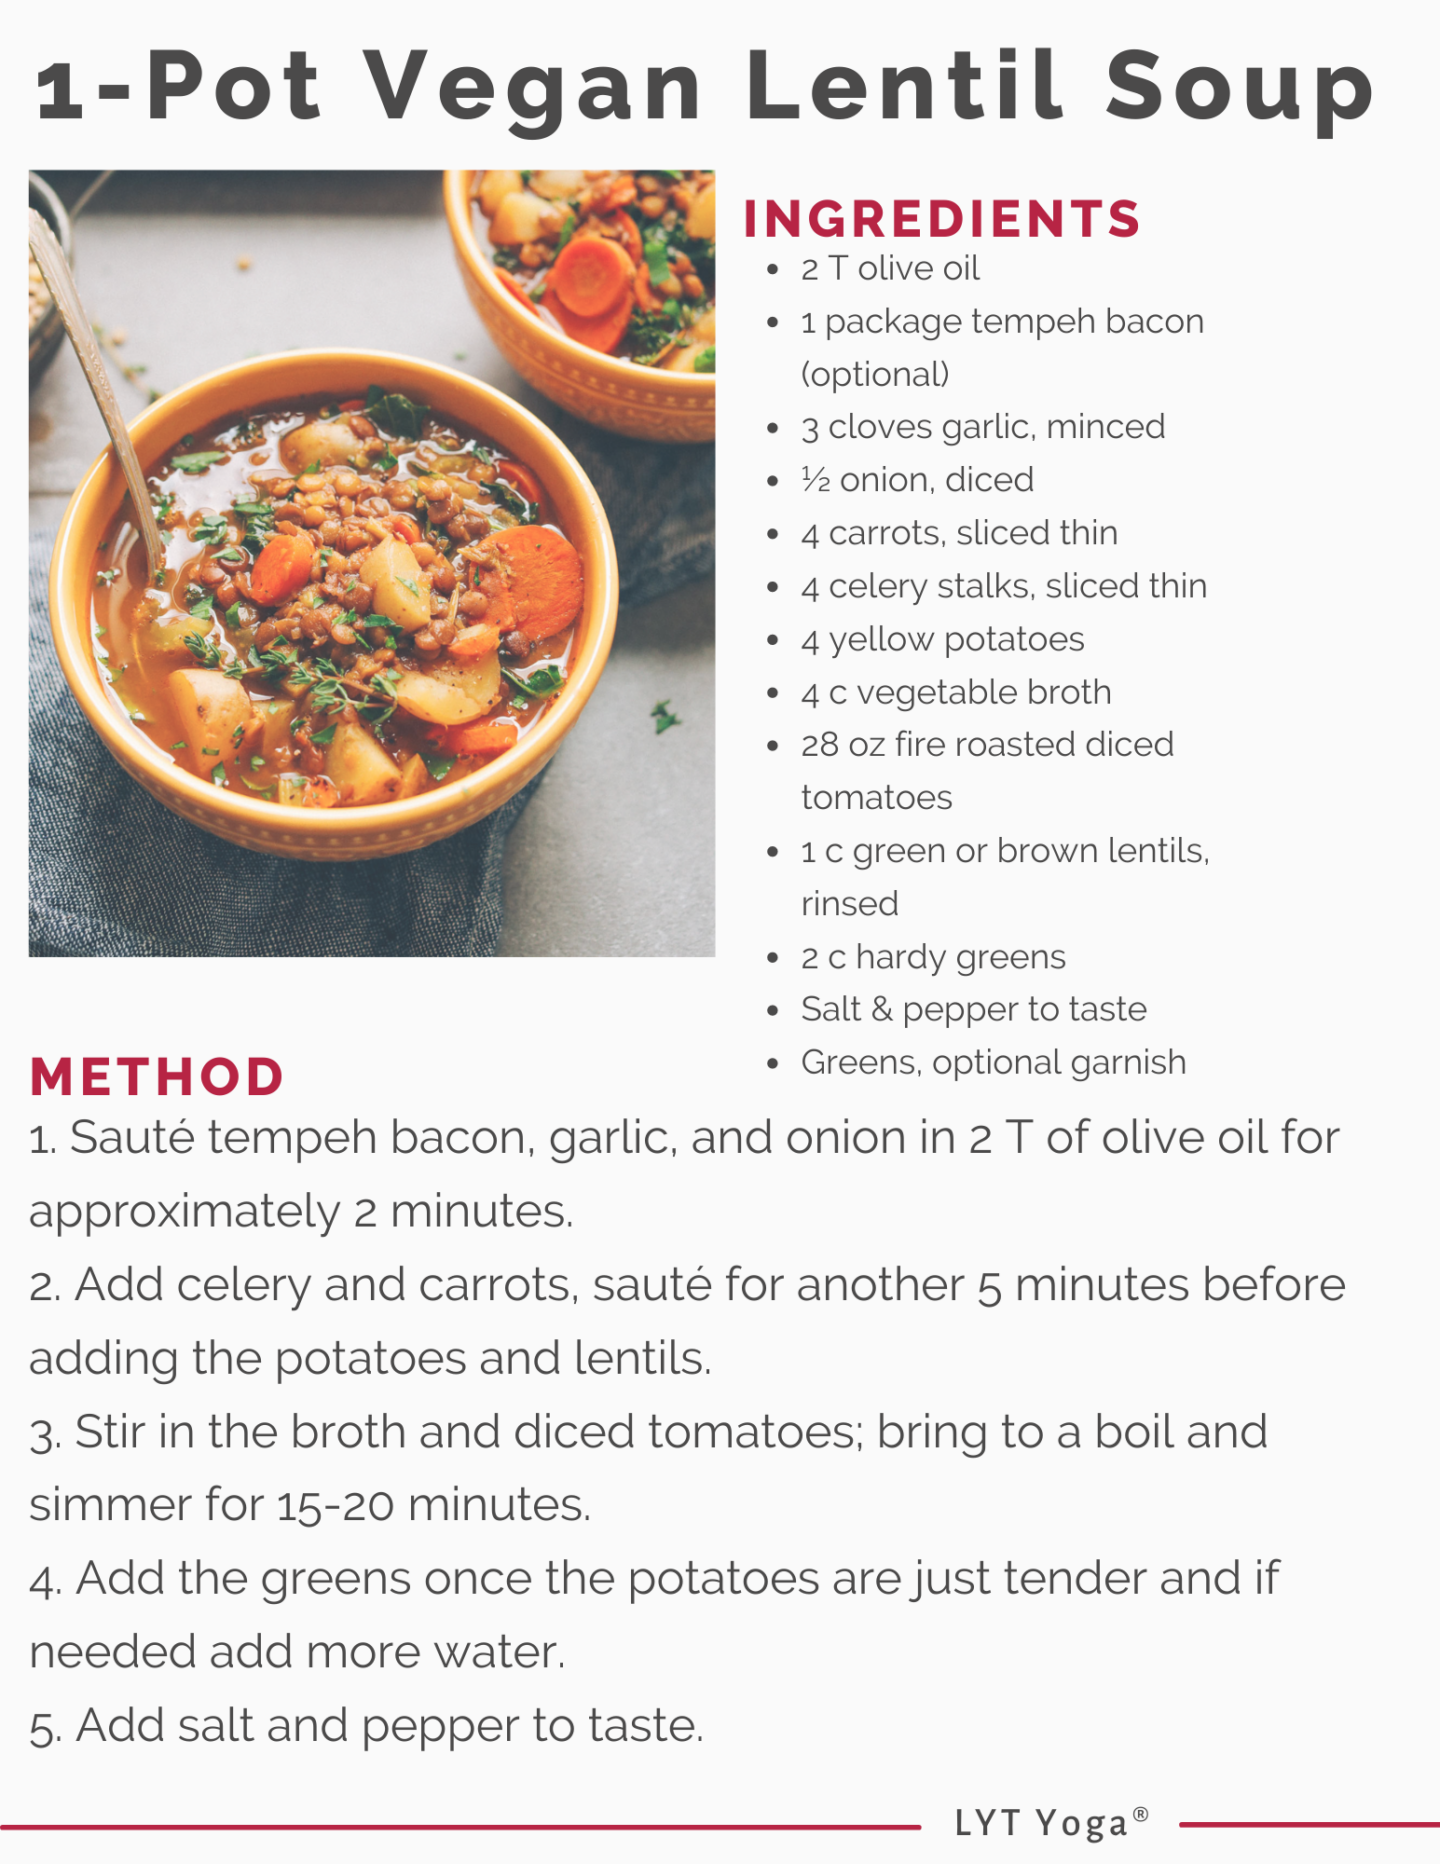 Recipe for Vegan Lentil Soup